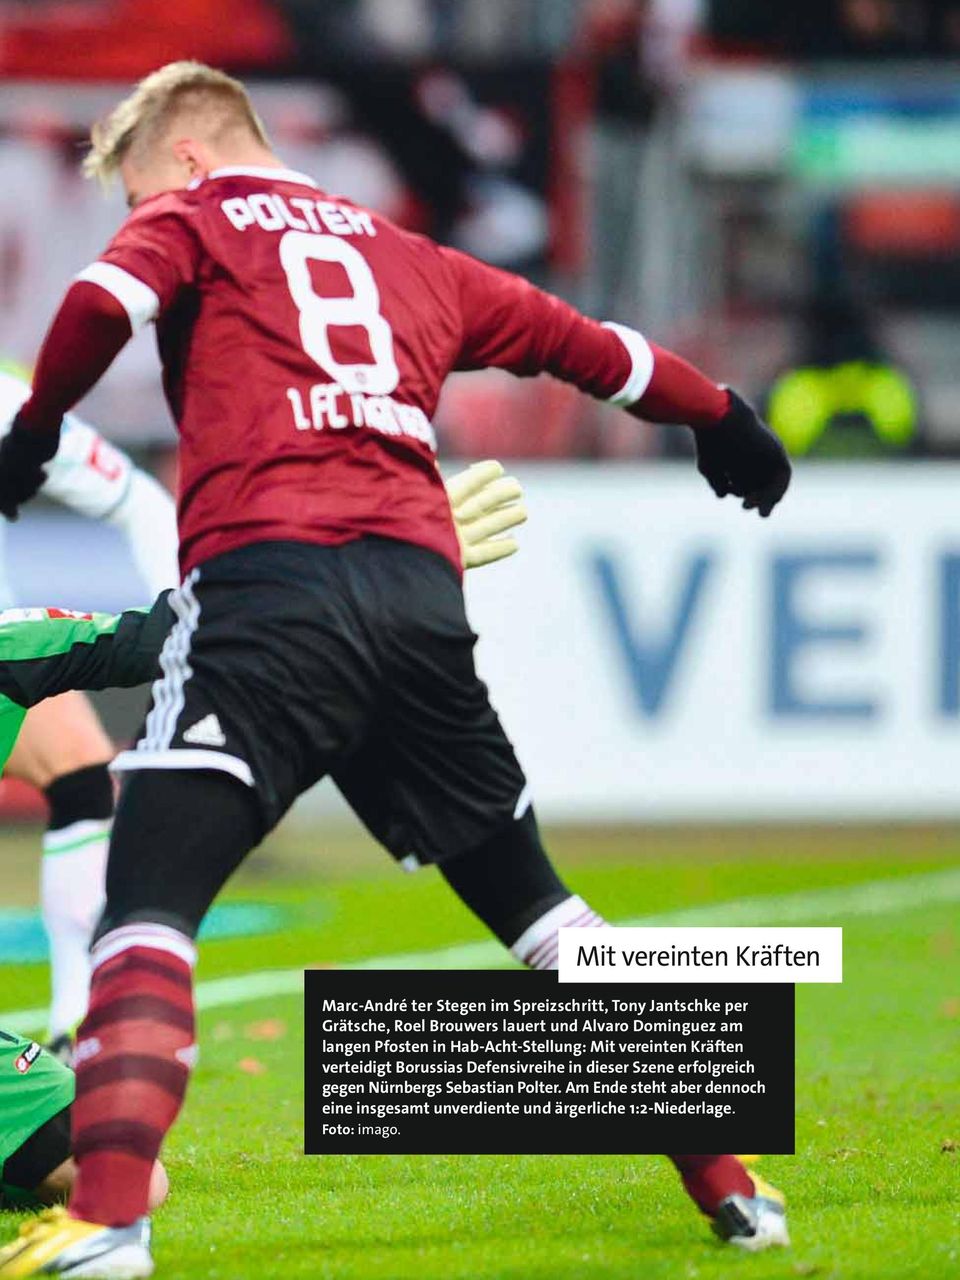 Kräften verteidigt Borussias Defensivreihe in dieser Szene erfolgreich gegen Nürnbergs Sebastian